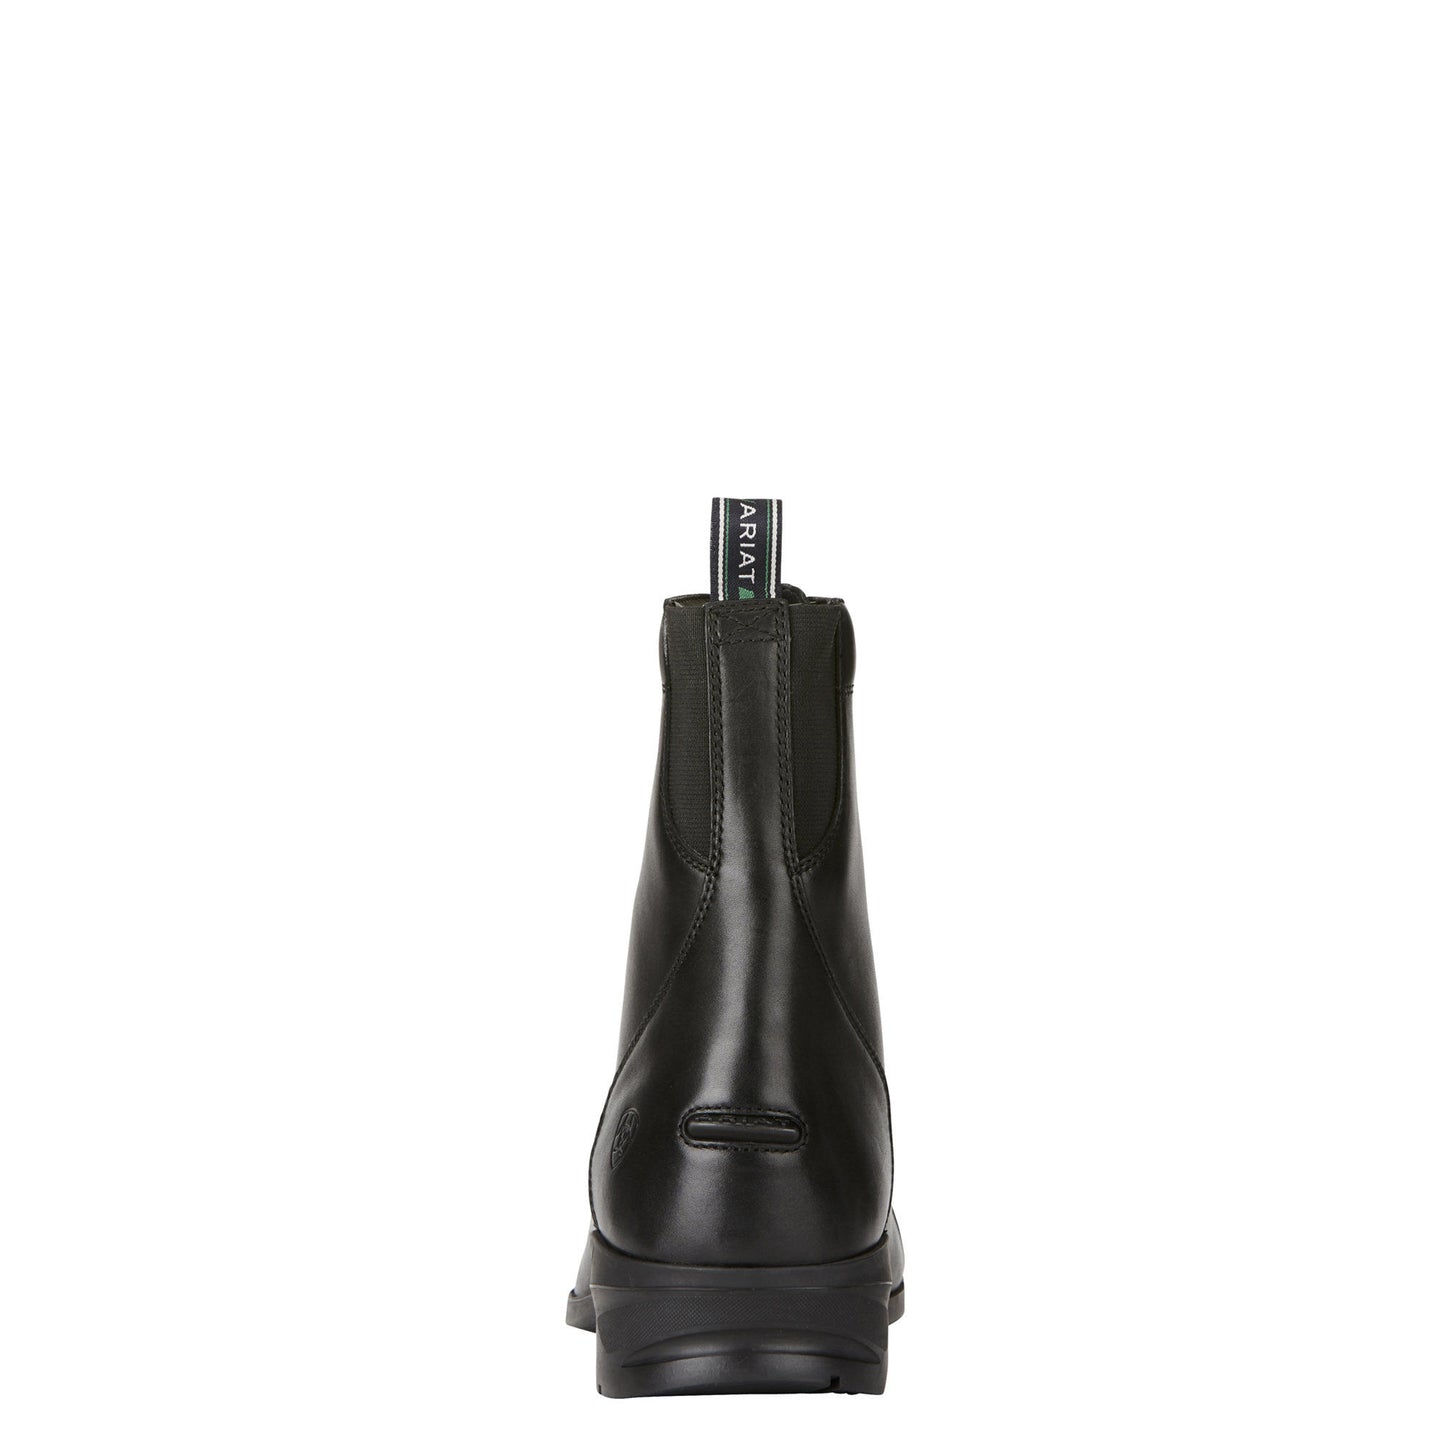 Ariat® Men's Heritage IV Lace Paddock Boot, Black